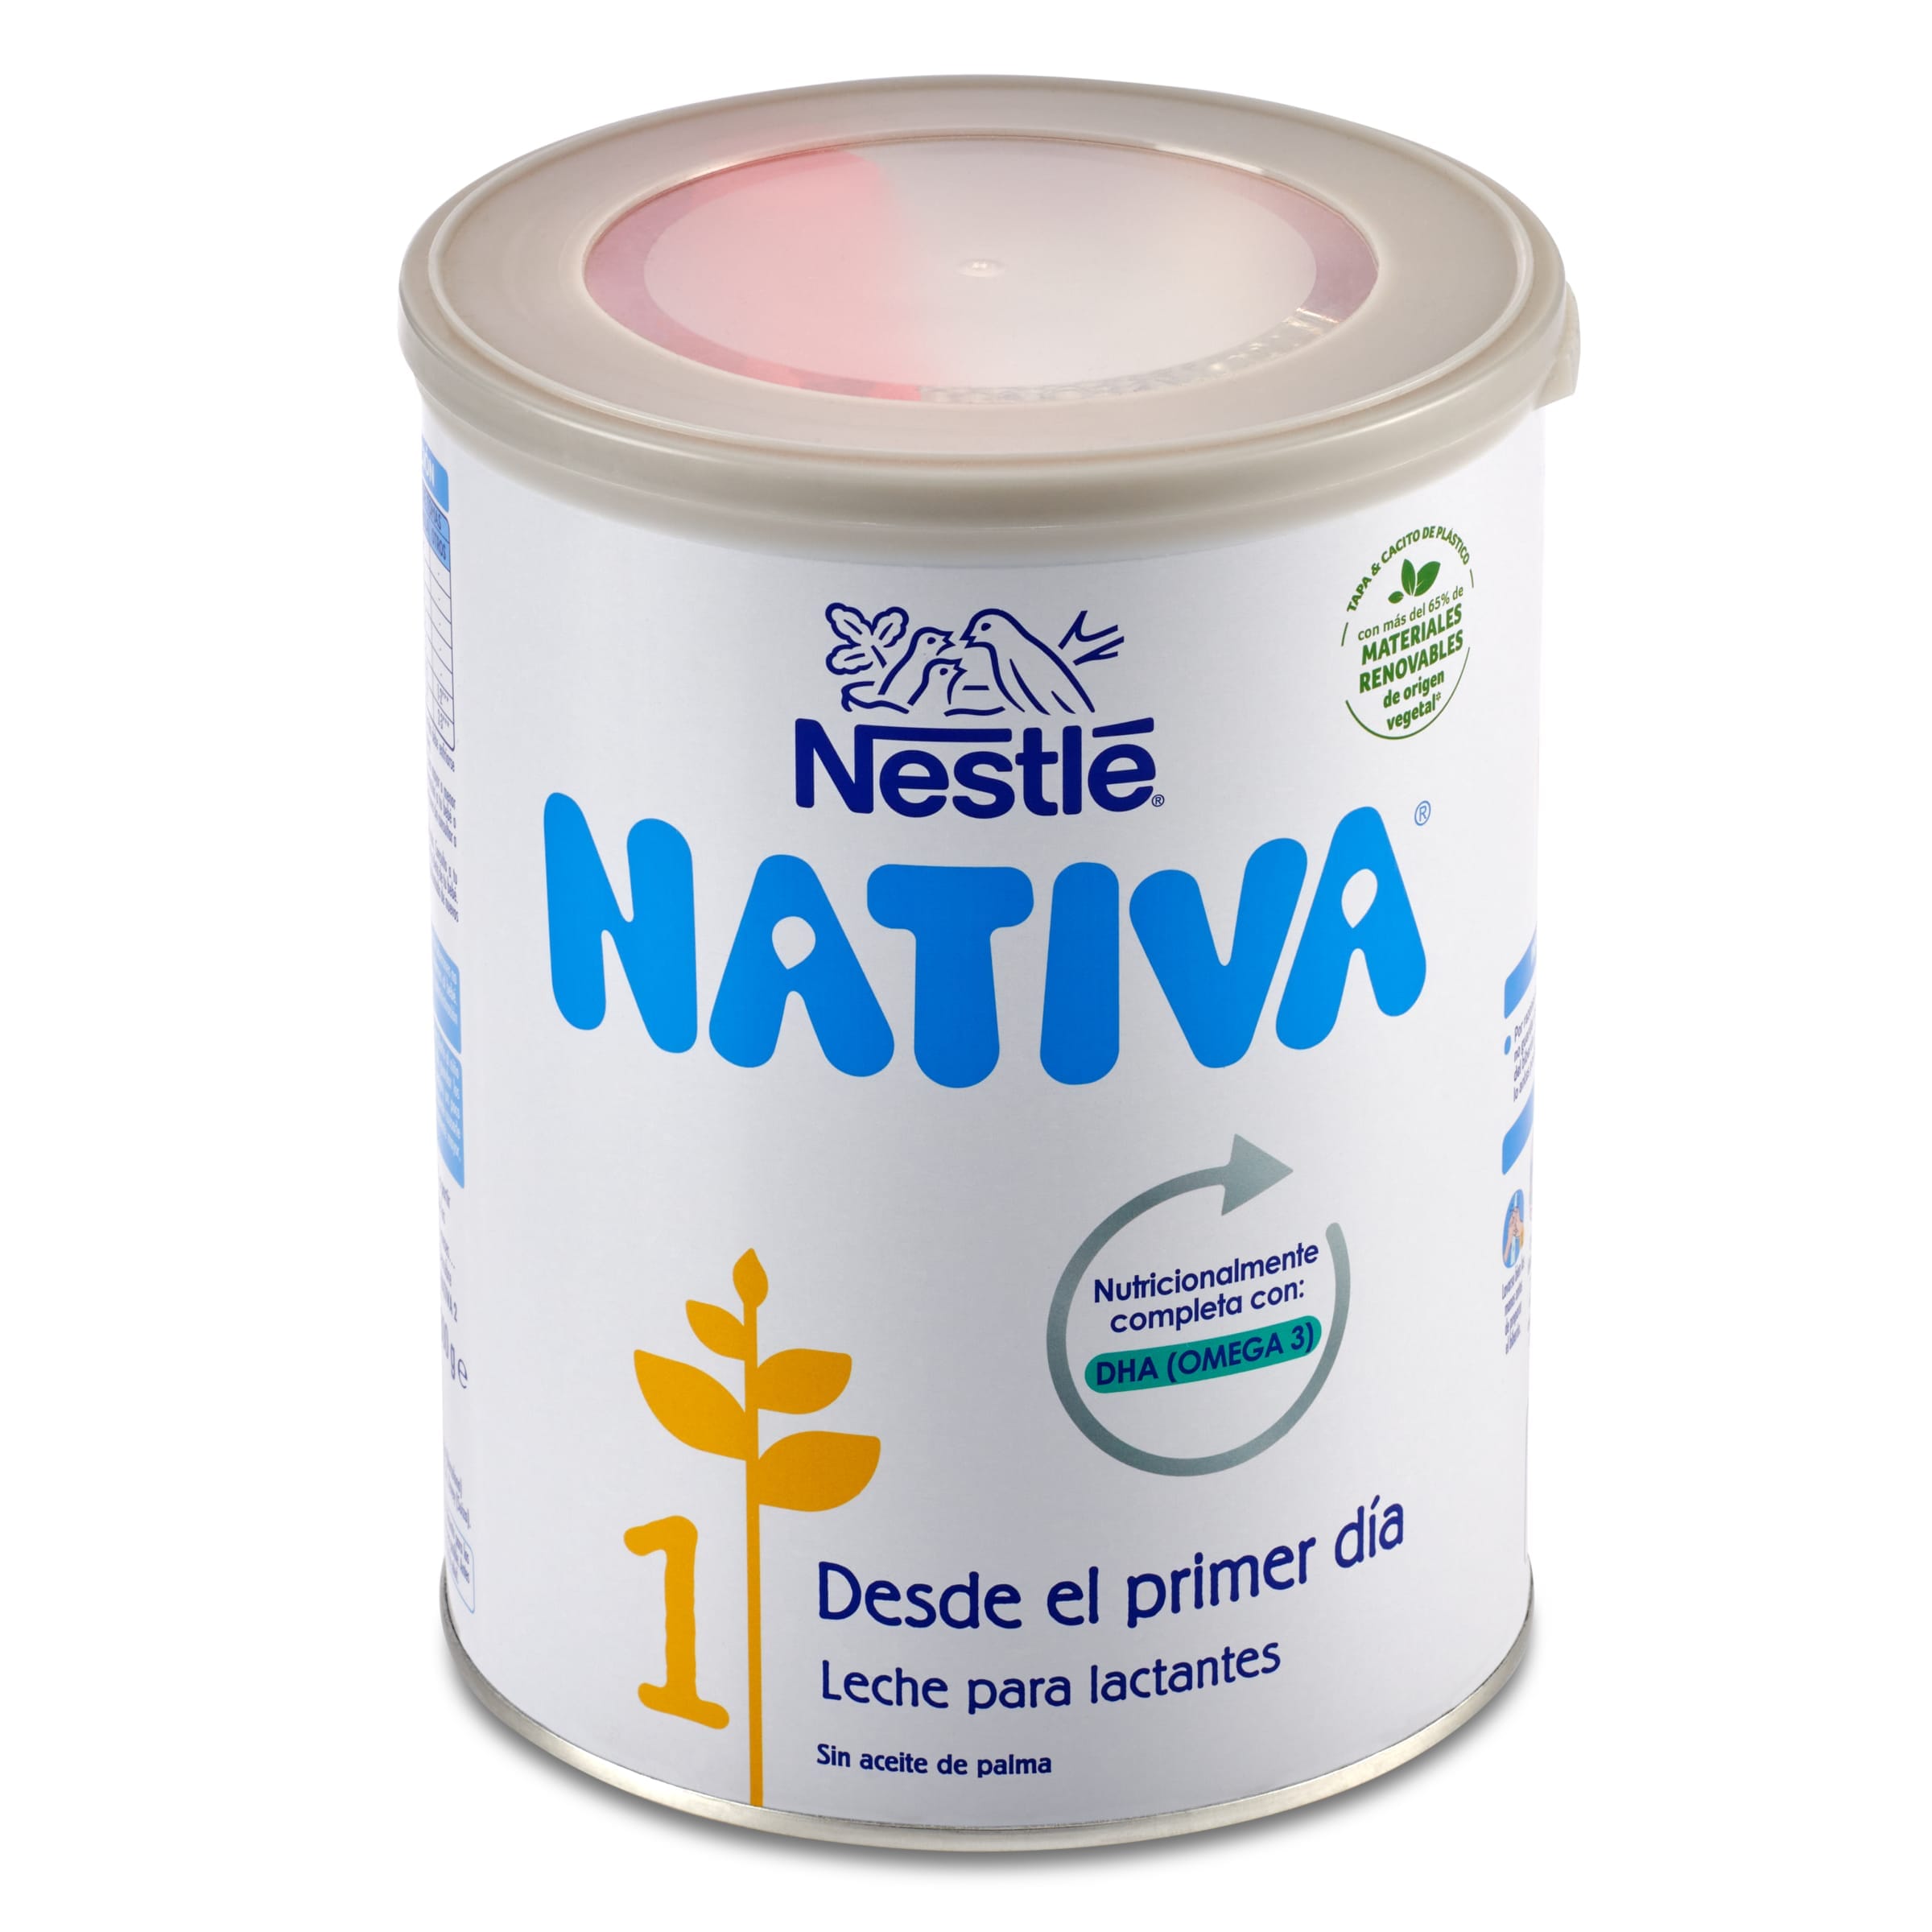 Comprar Nestlé Nativa 1 800 gr - Leche para lactantes 